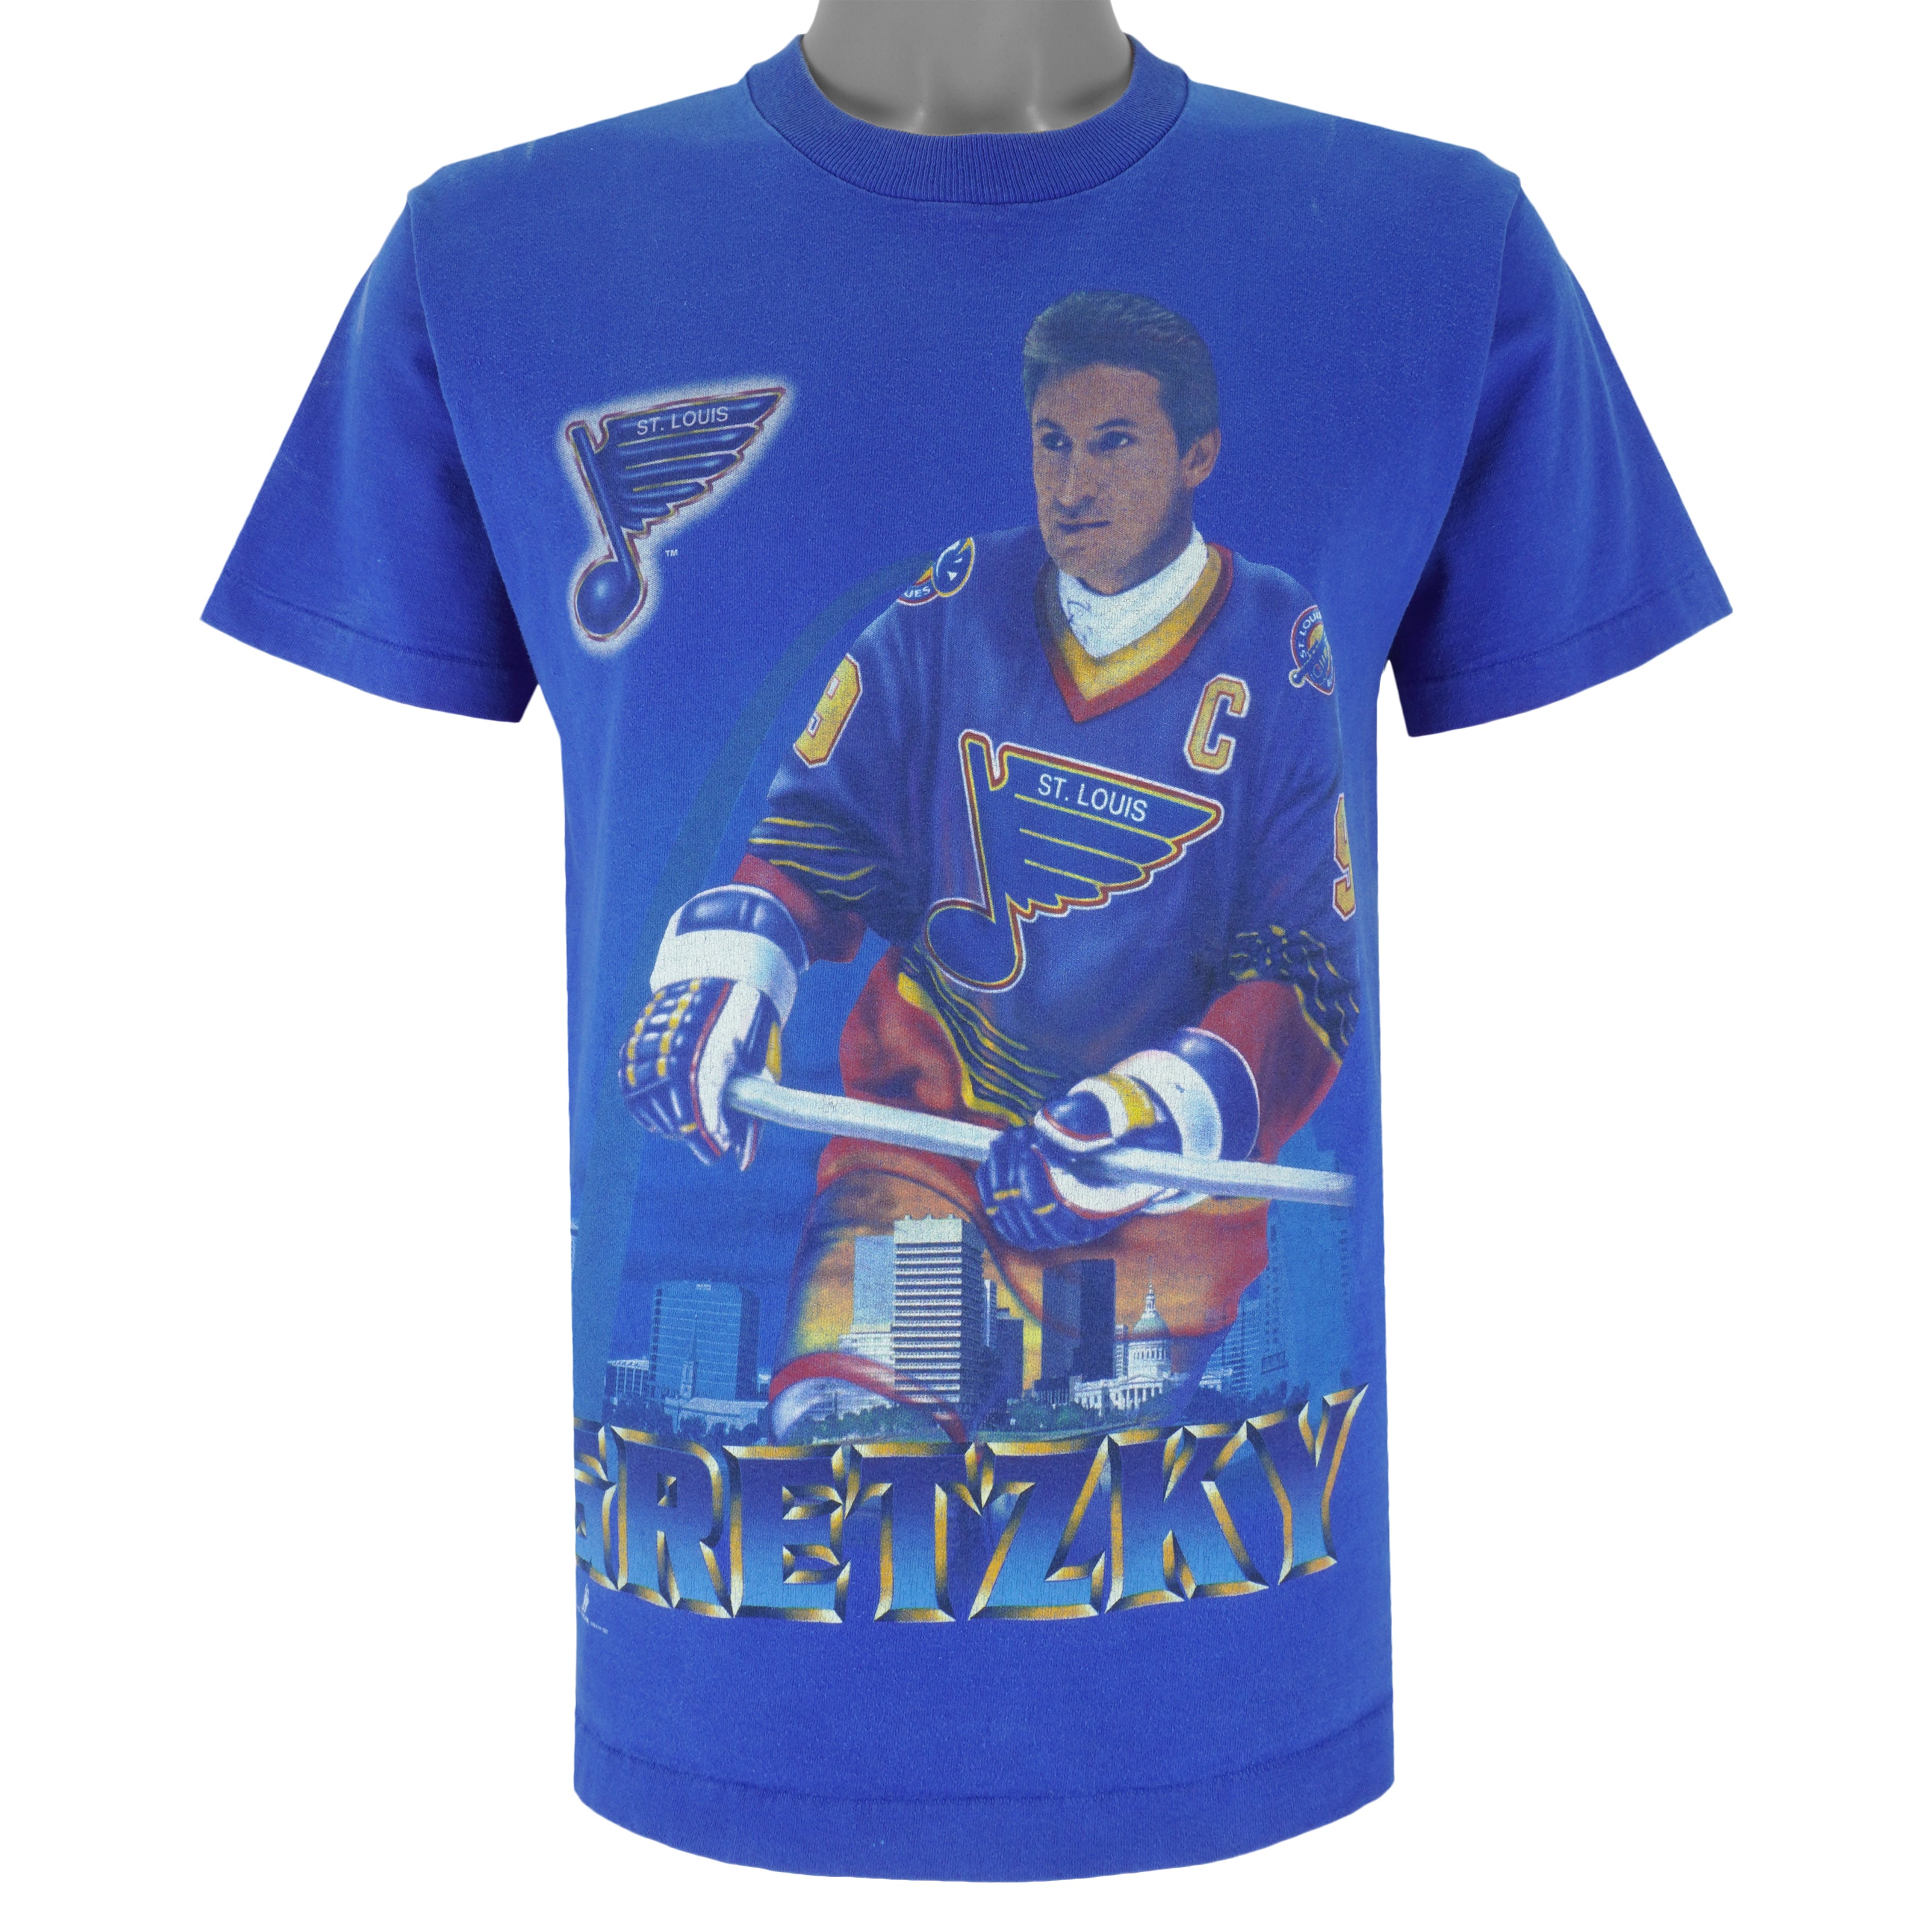 Vintage St. Louis Blues Hockey Pro Player T Shirt